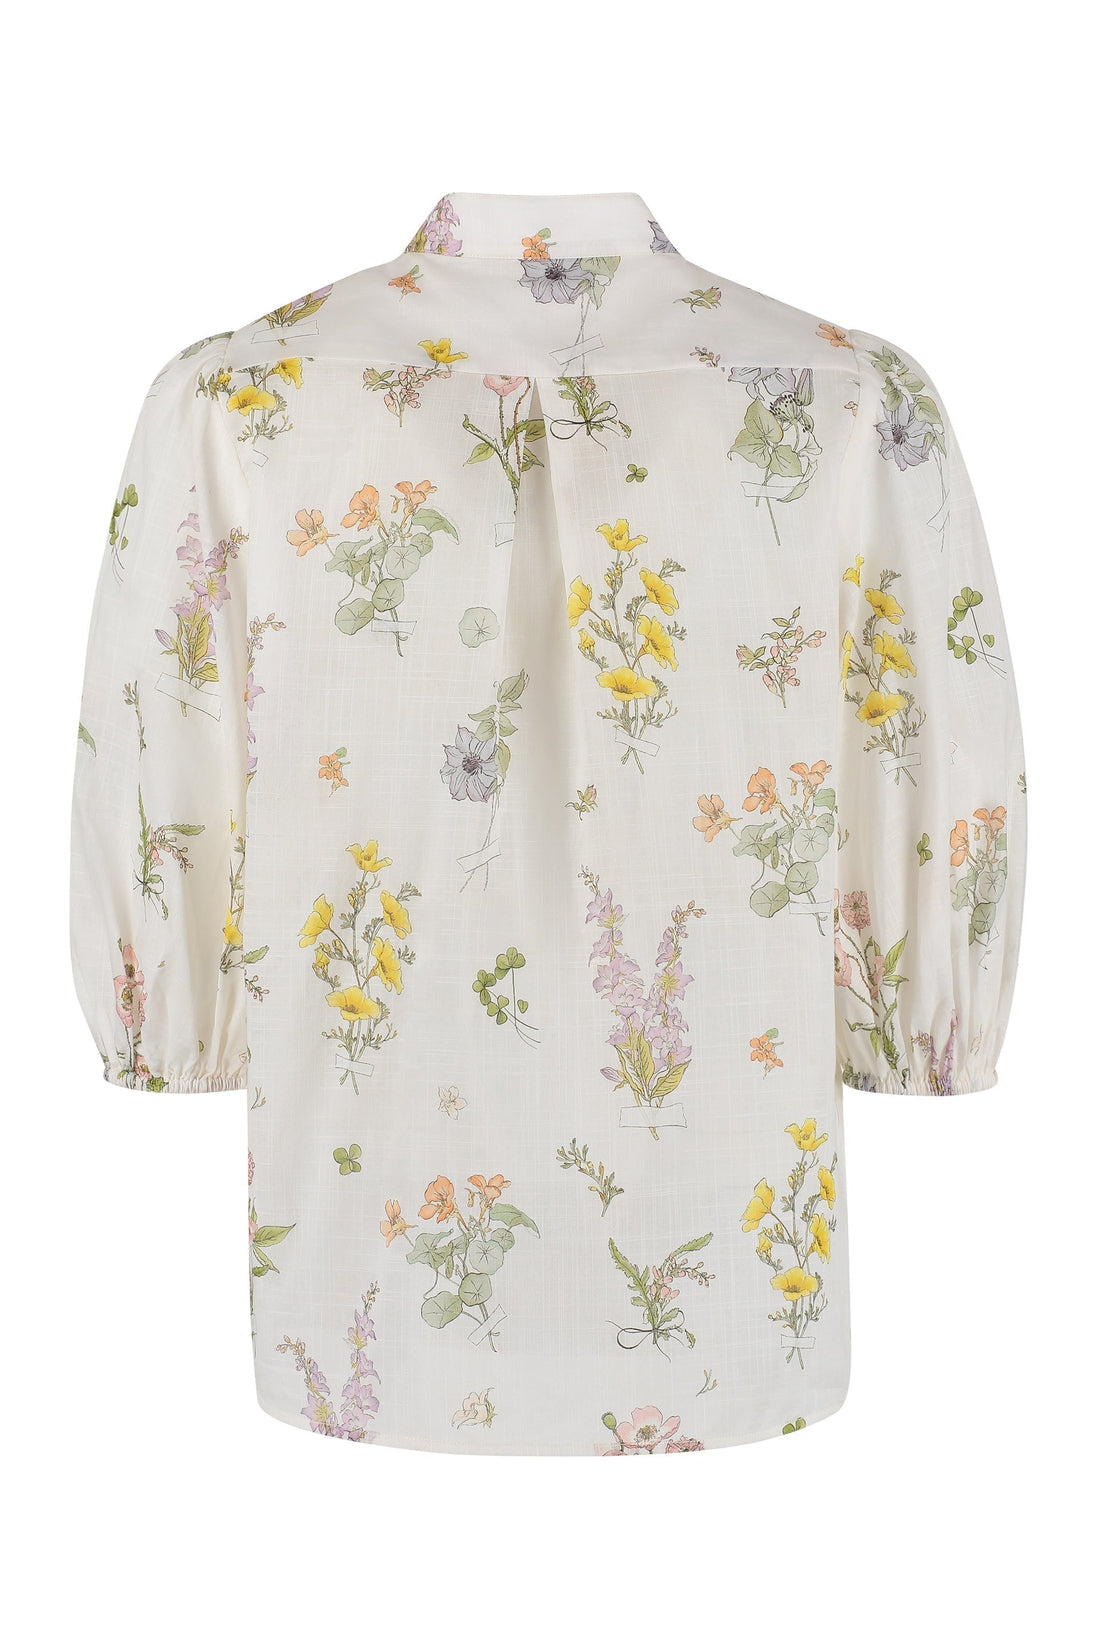 Zimmermann-OUTLET-SALE-Jeannie Printed cotton shirt-ARCHIVIST